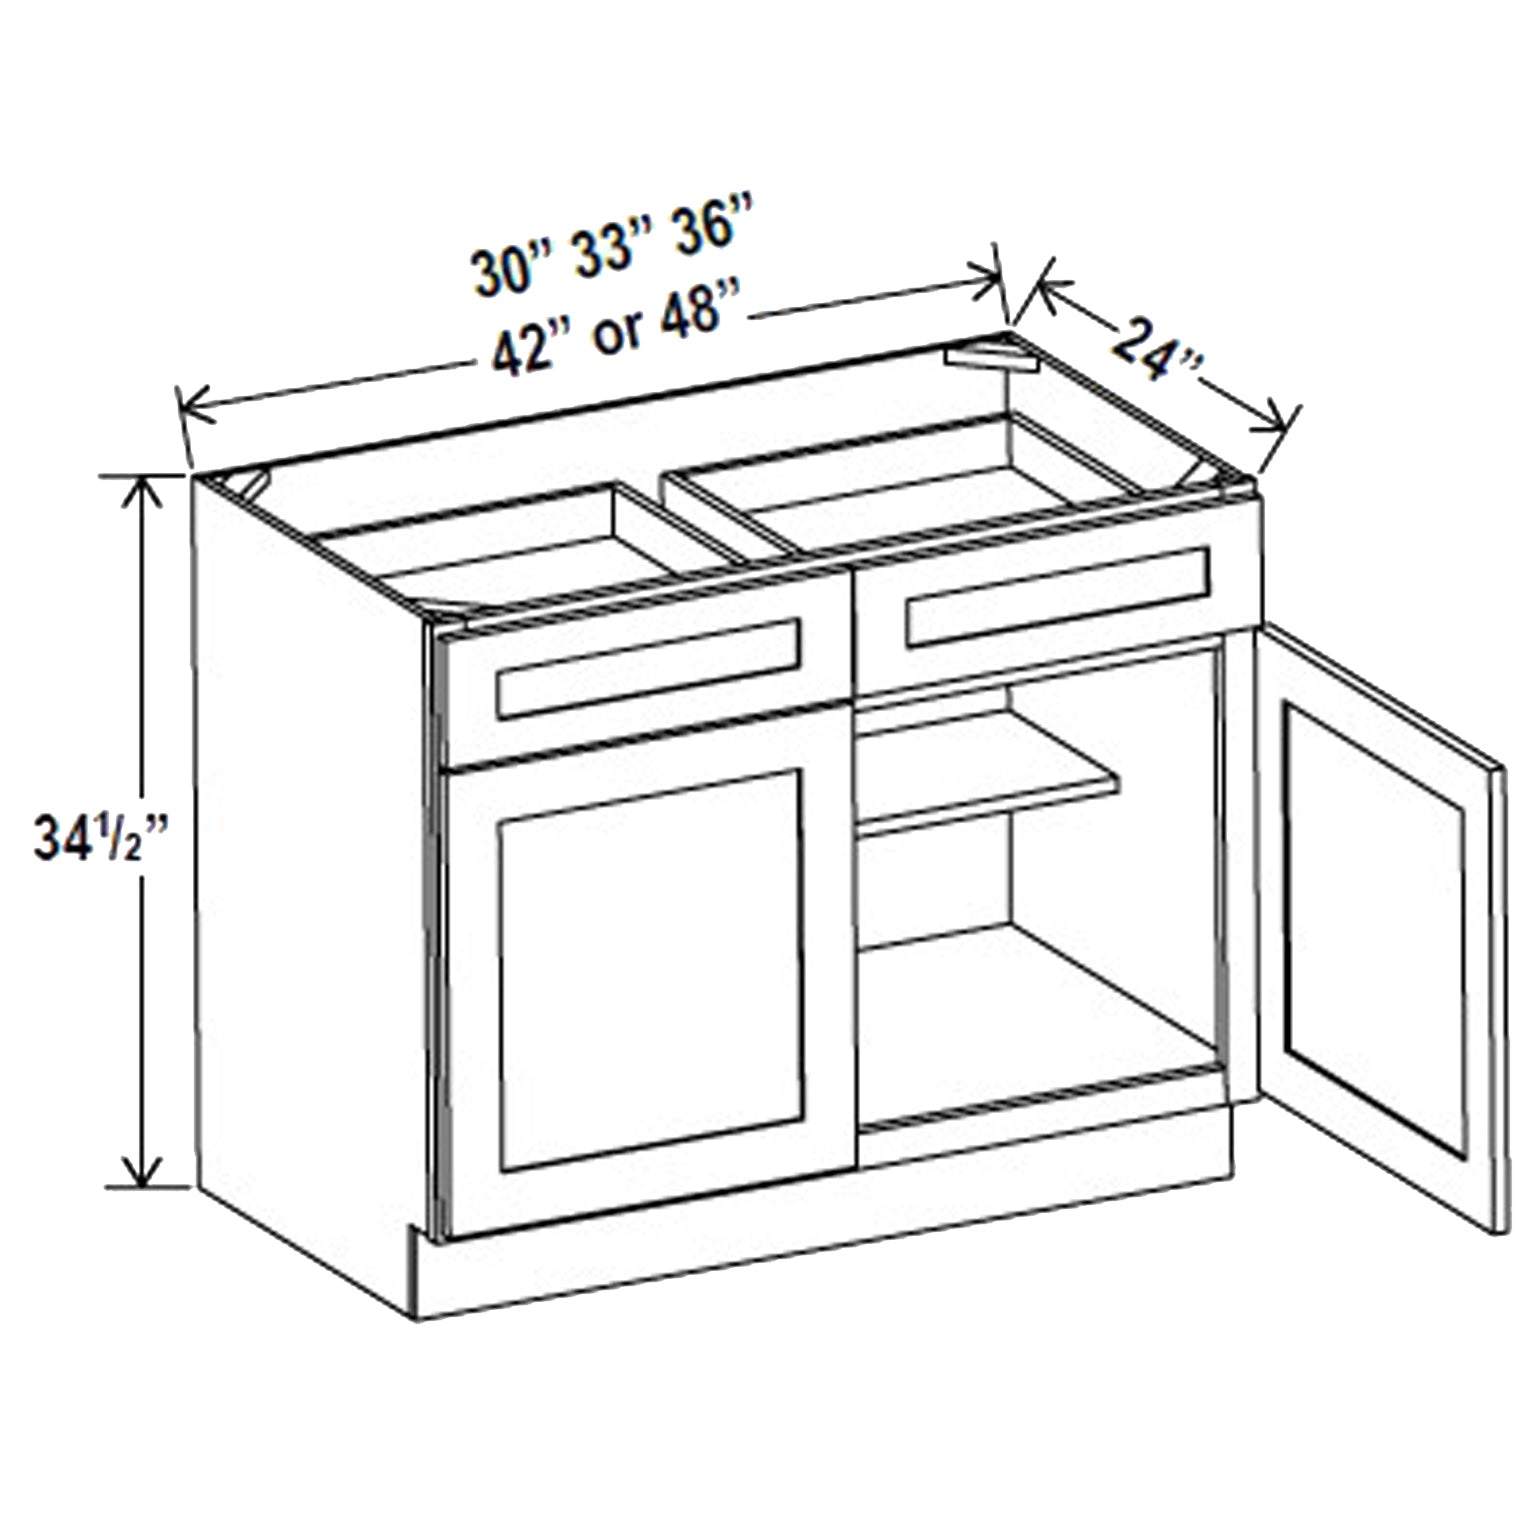 Kitchen Base Cabinets - 48W x 34.5H x 24D - Grey Shaker Cabinet